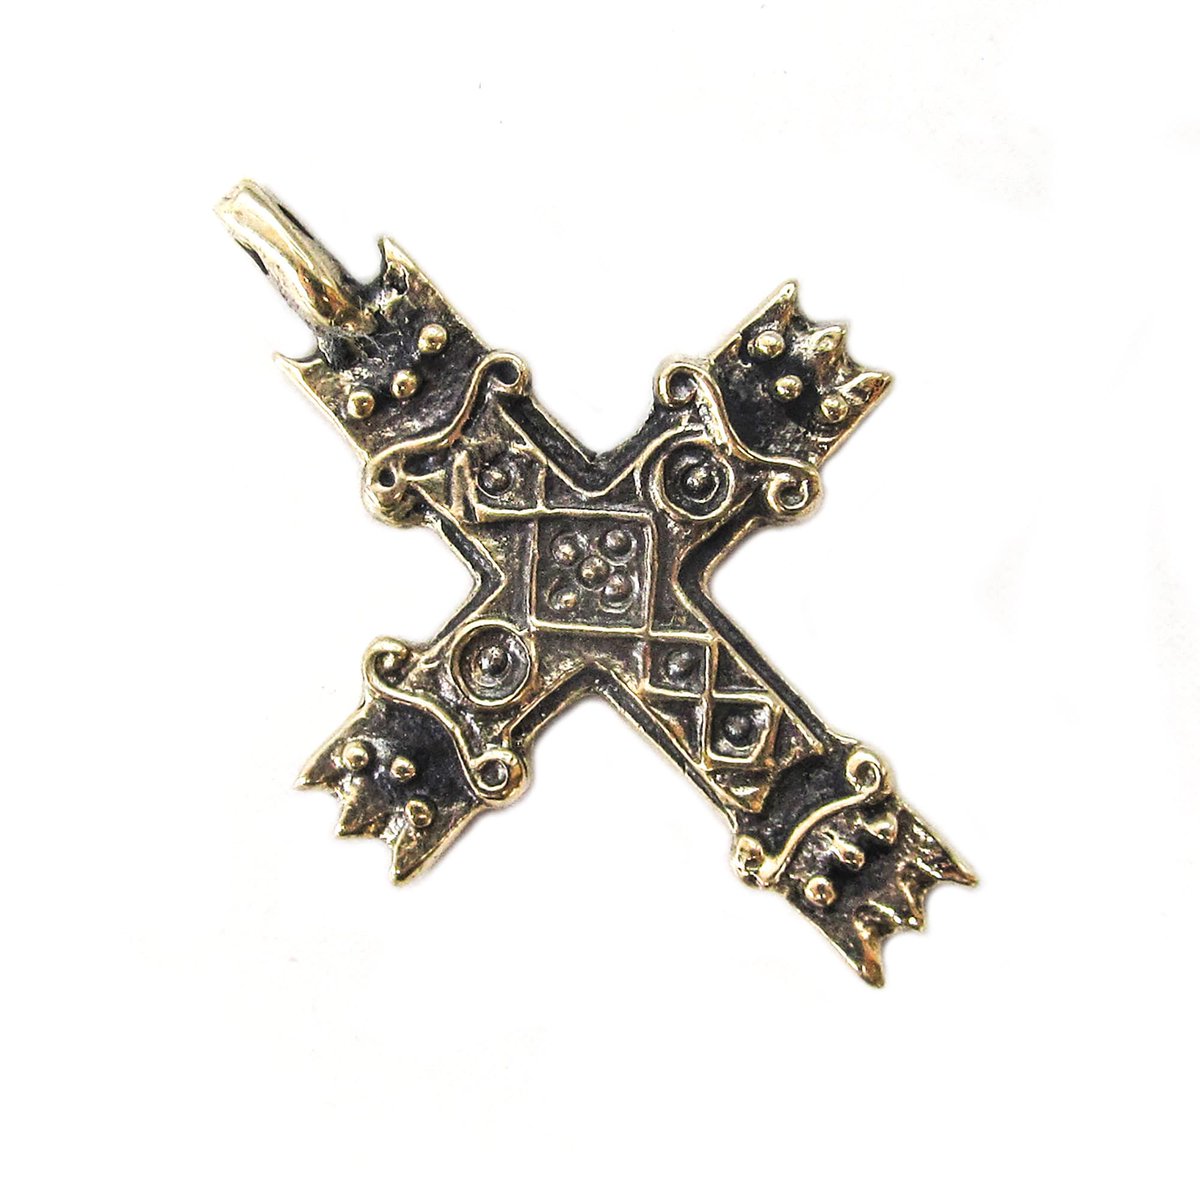 #christianity_brass_cross #brass_cross_necklace_pendant #Handmade_cross_necklace #traditional_cross_pendant #UkraineKompakt_brass_cross #ukraine_jewelry
kosivceramart.etsy.com/listing/164495…